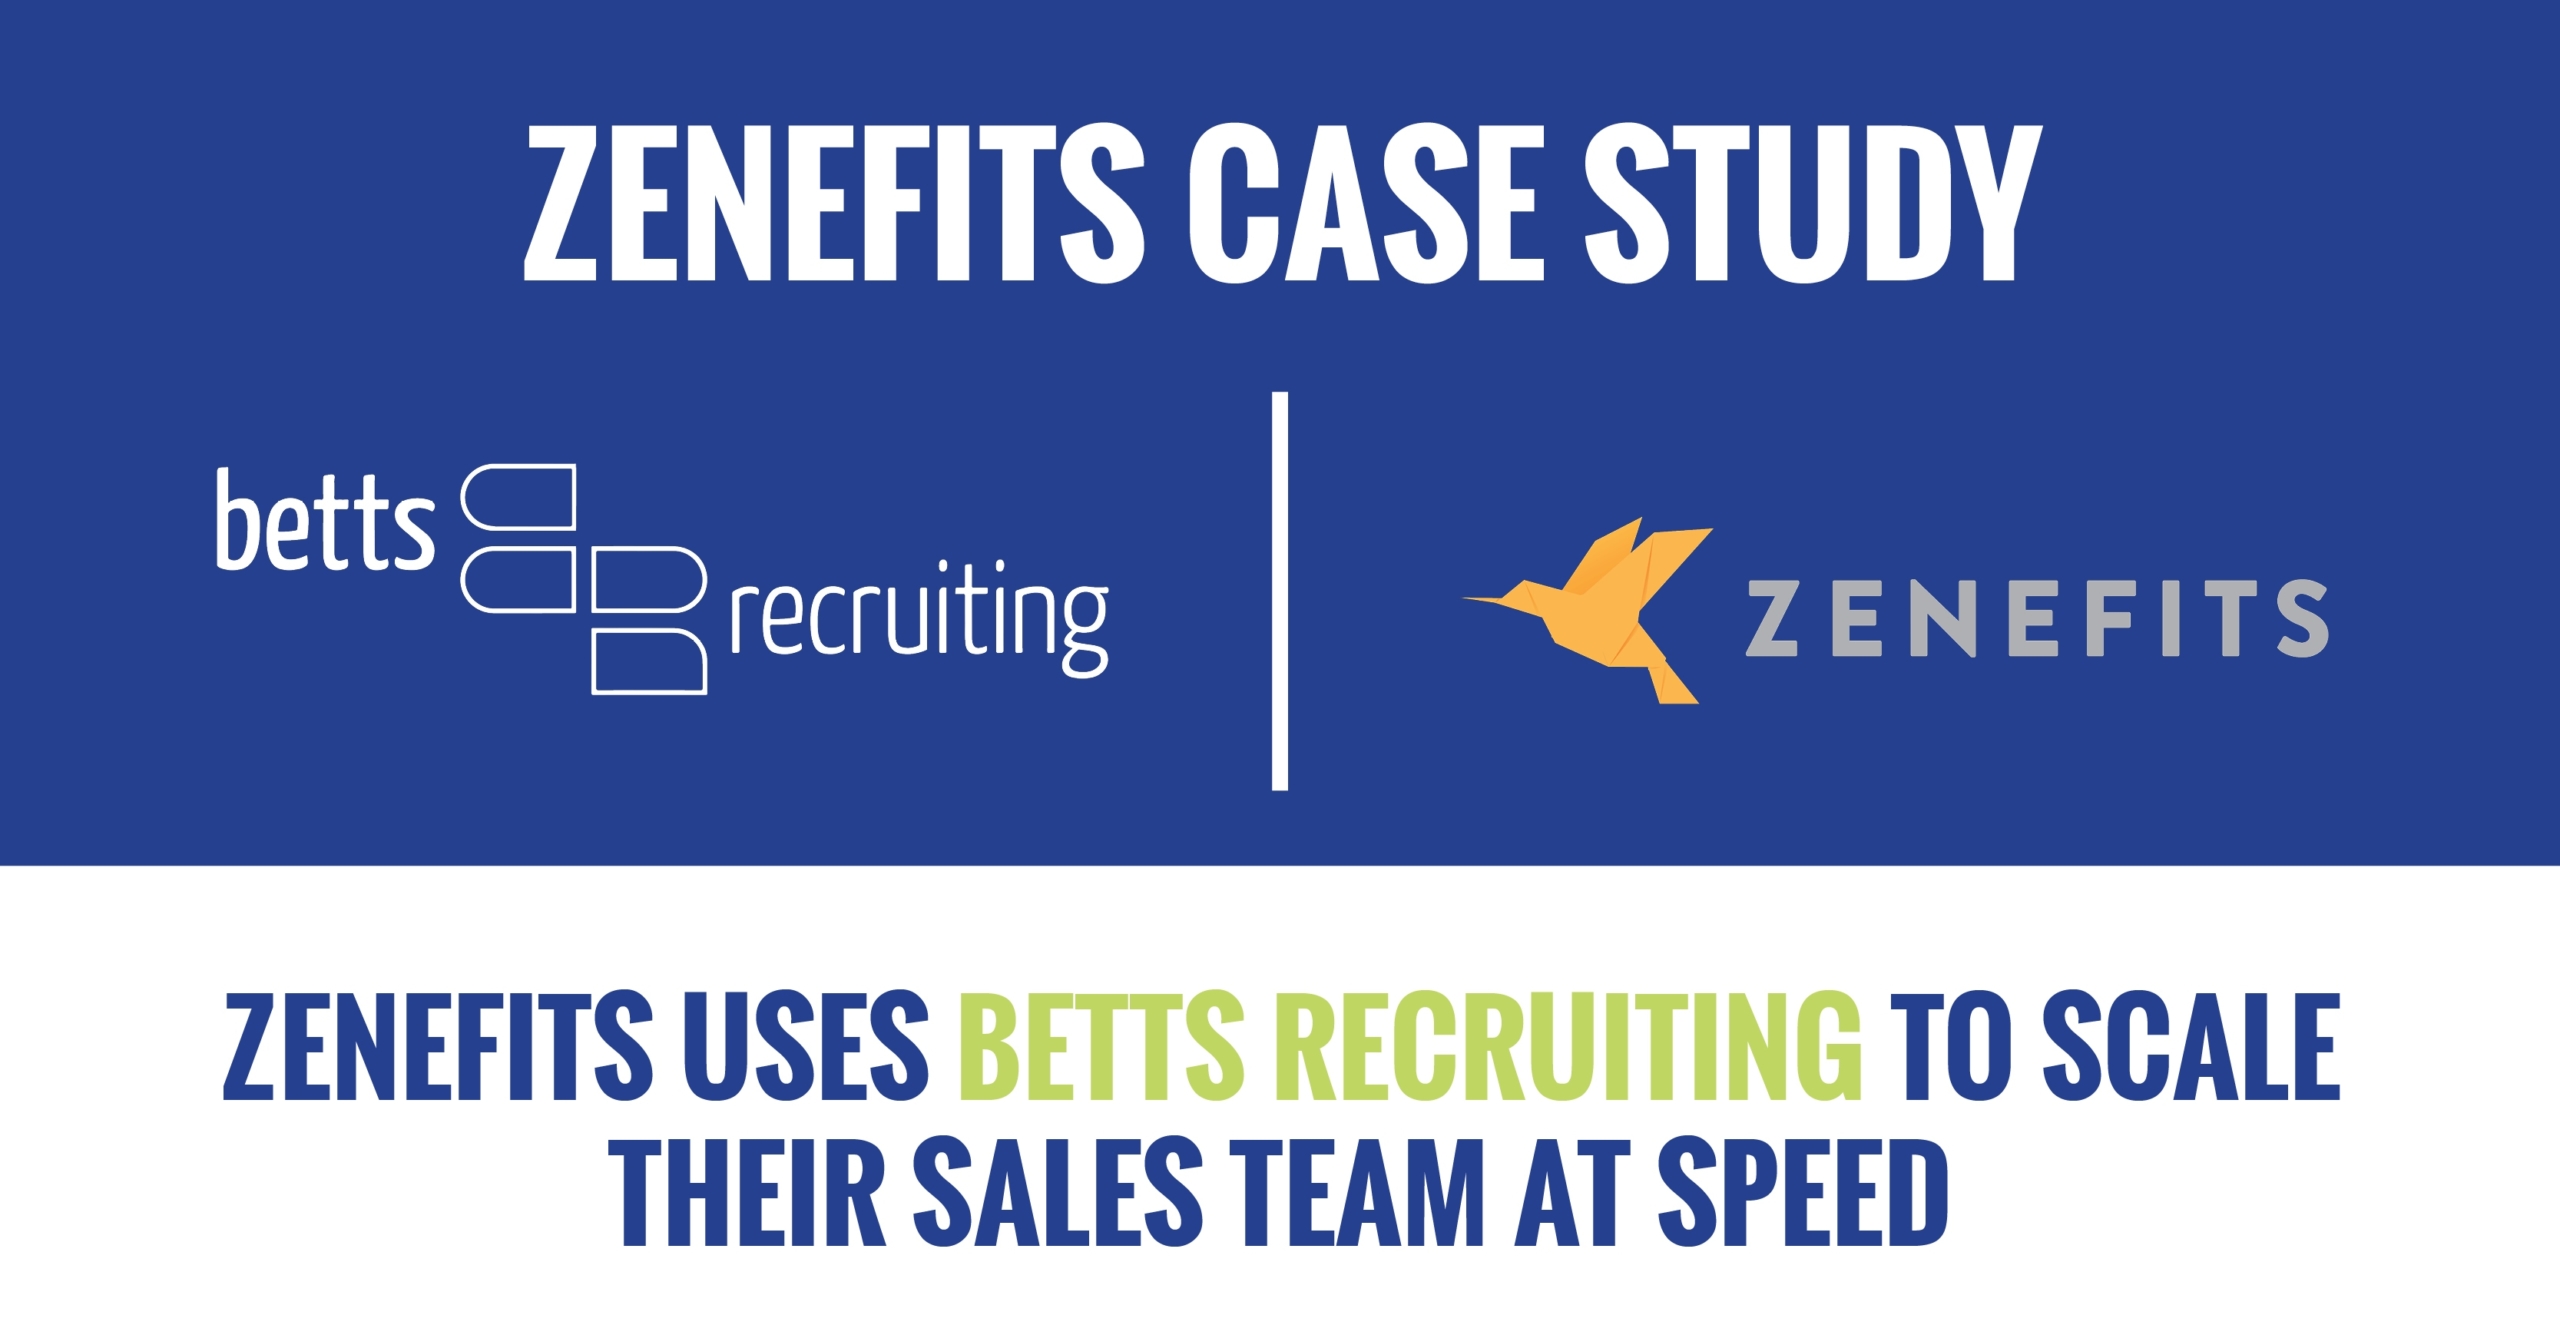 Betts Recruiting: Zenefits Case Study